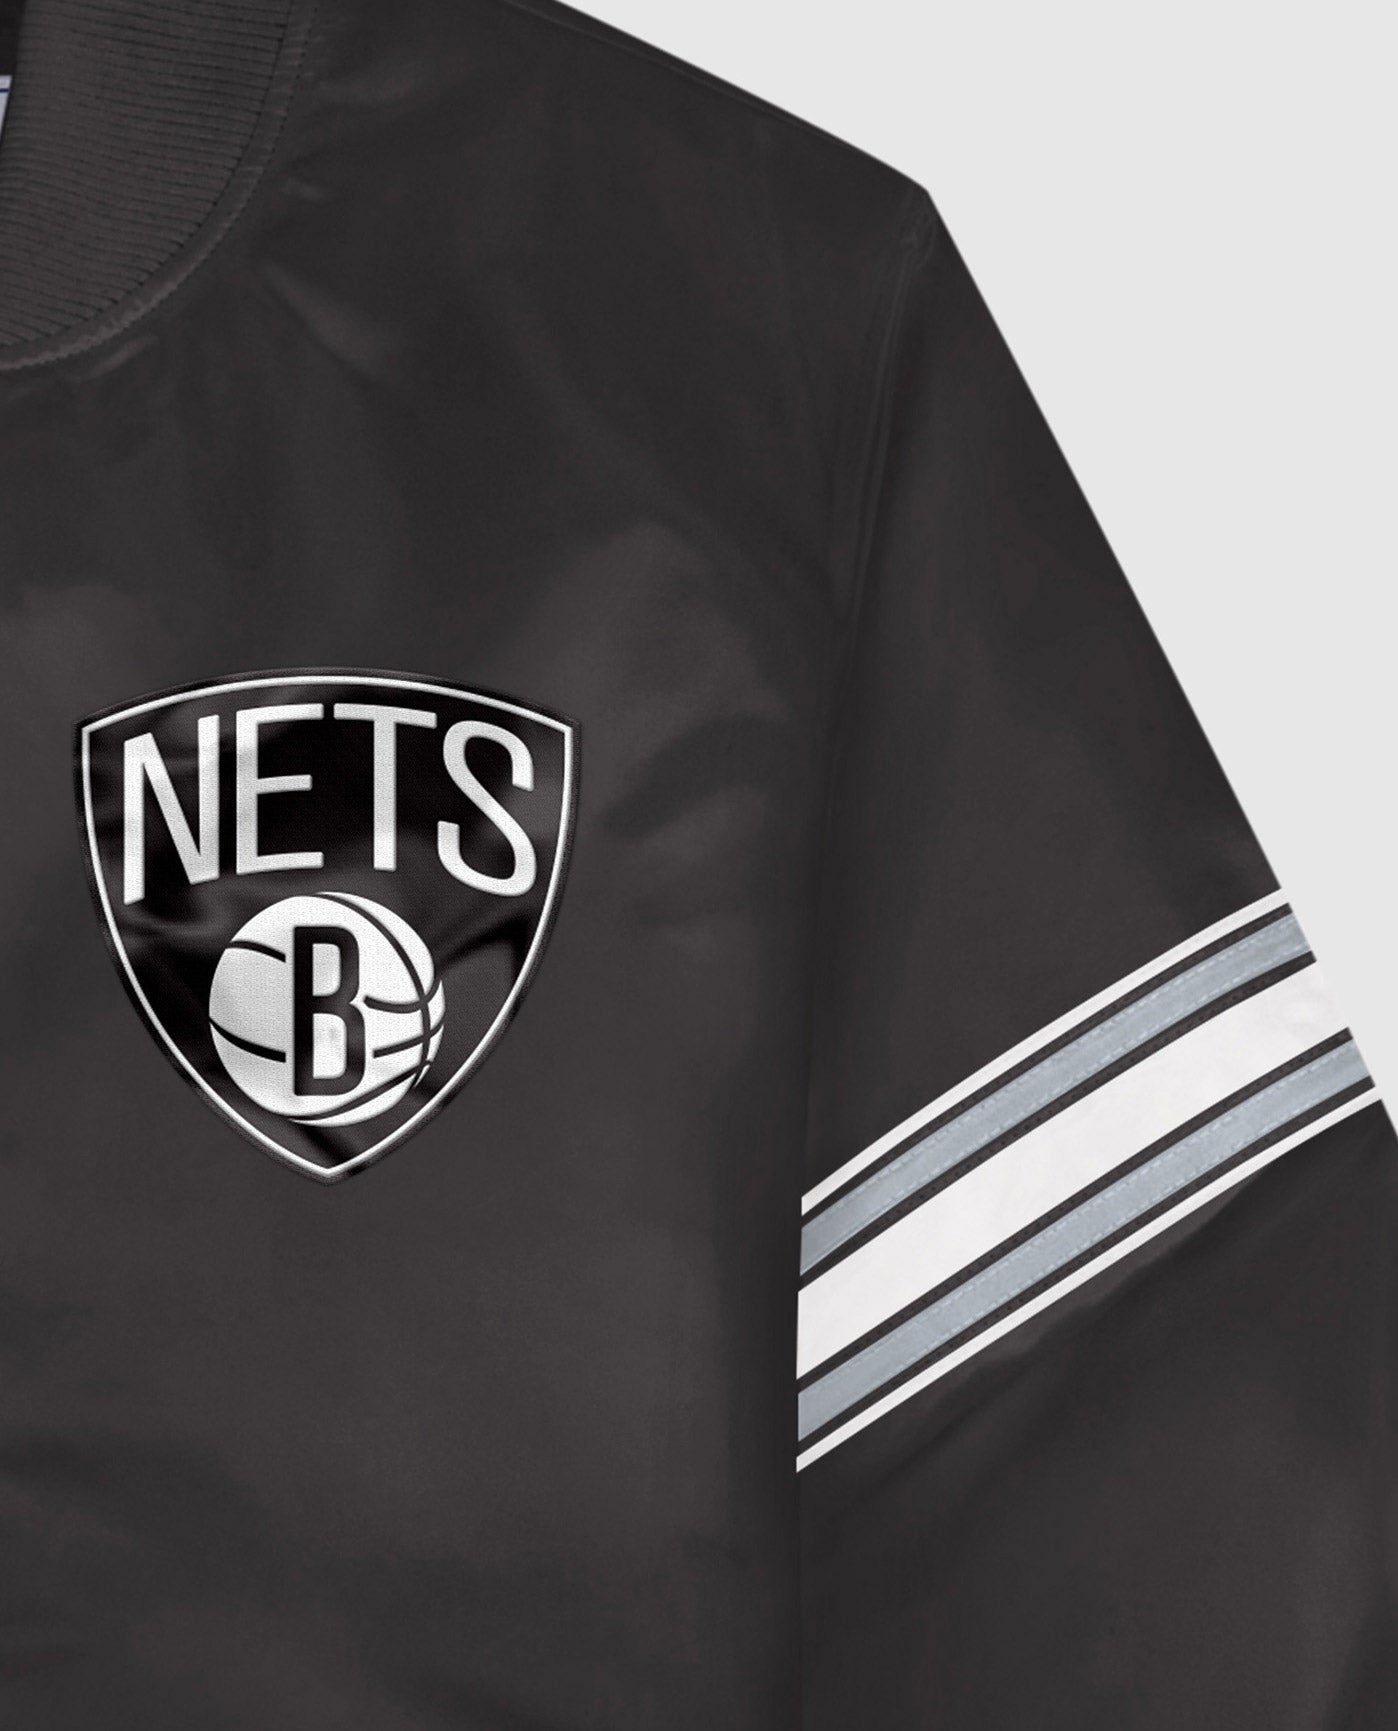 NBA Brooklyn Nets Throwback Pitch Satin Jacket - Maker of Jacket